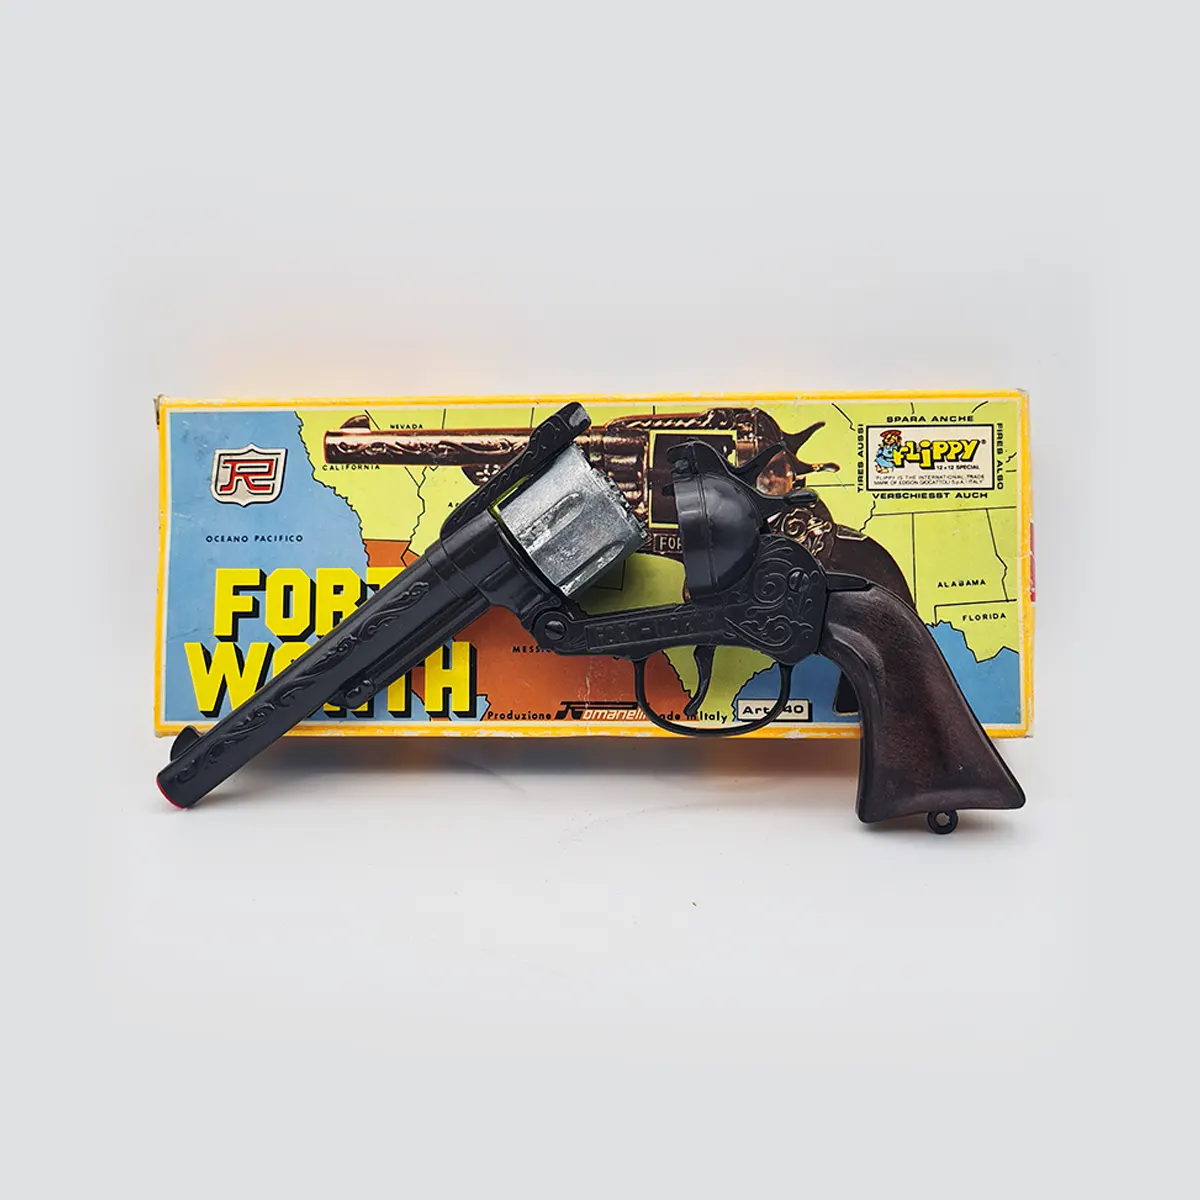 Fort Worth Revolver with Original Box Toy gun 2